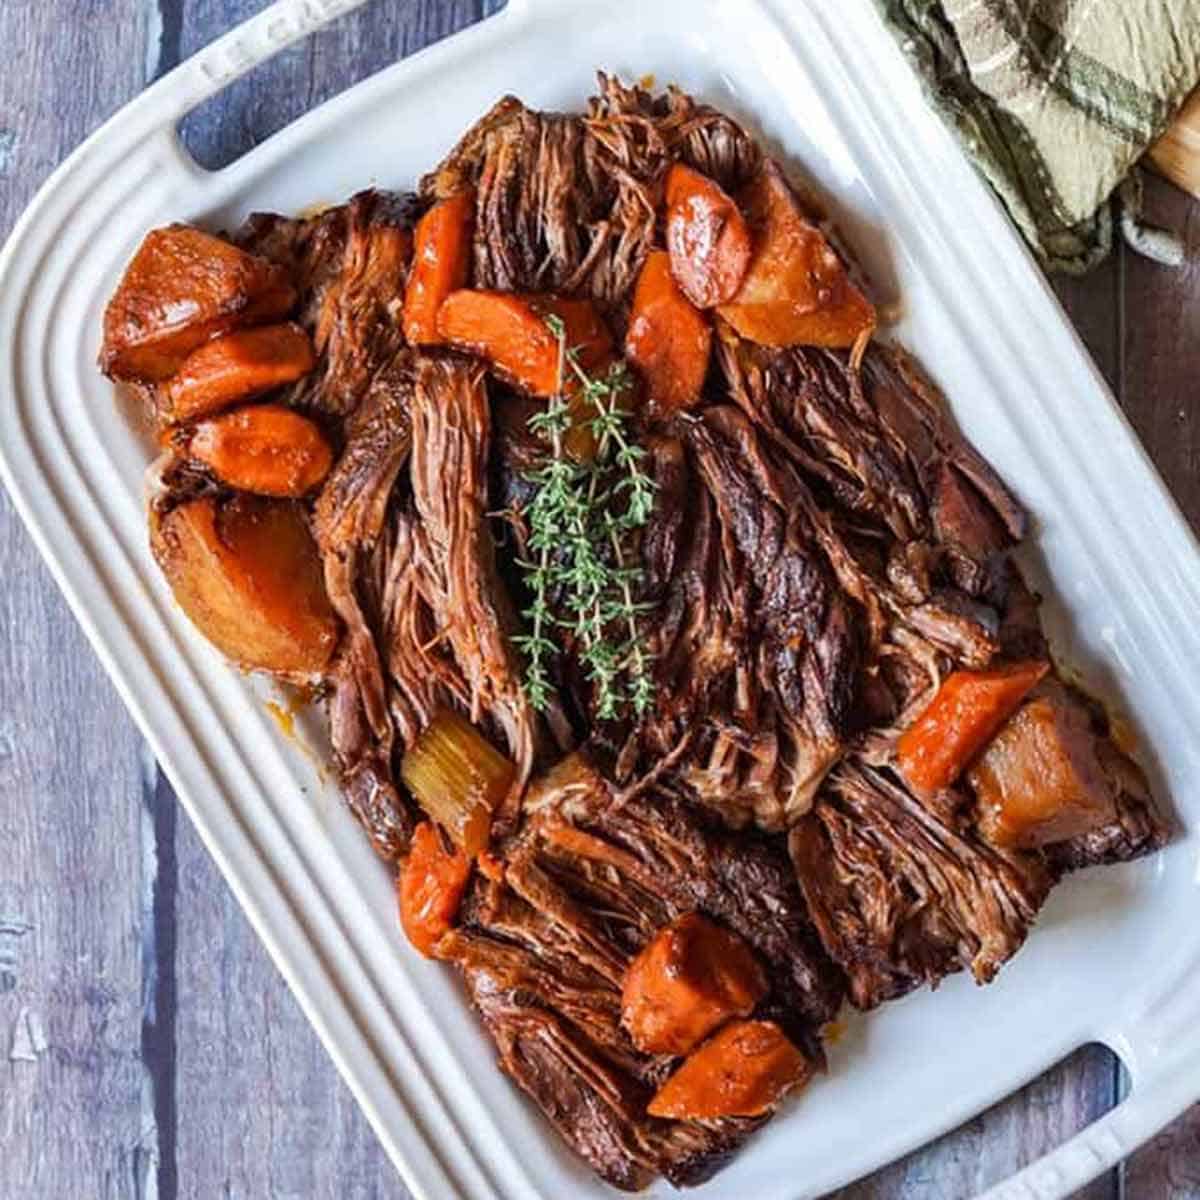 https://sundaysuppermovement.com/wp-content/uploads/2019/12/beef-chuck-roast-recipe-2.jpg